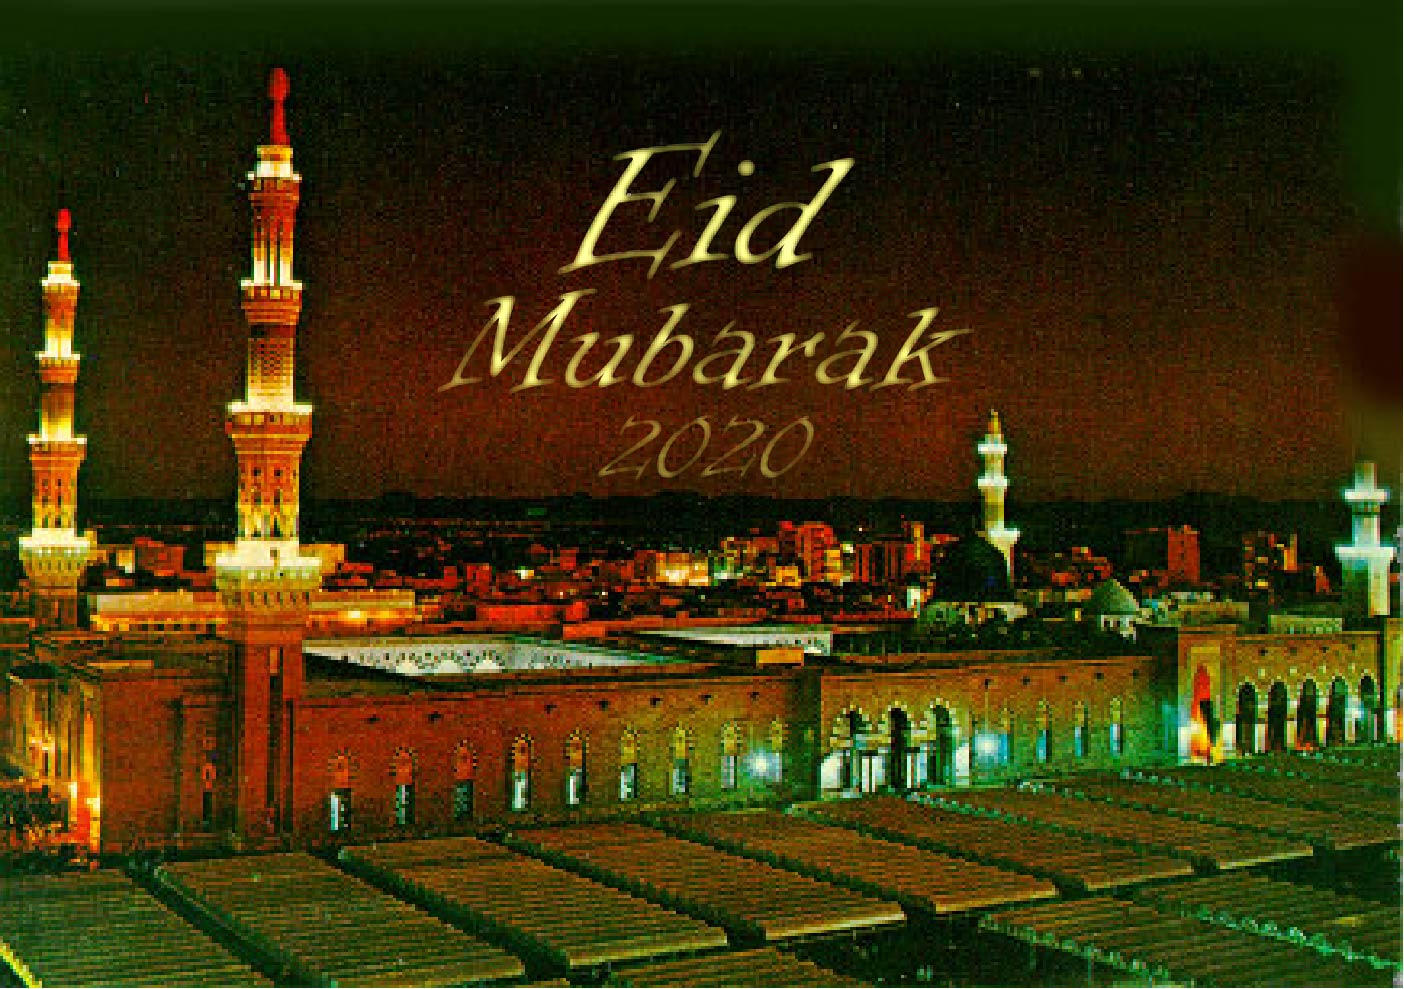 EID MUBARAK 2020 HD PIC, Eid Mubarak 2020 Pic, wishes, SMS, wellpaper